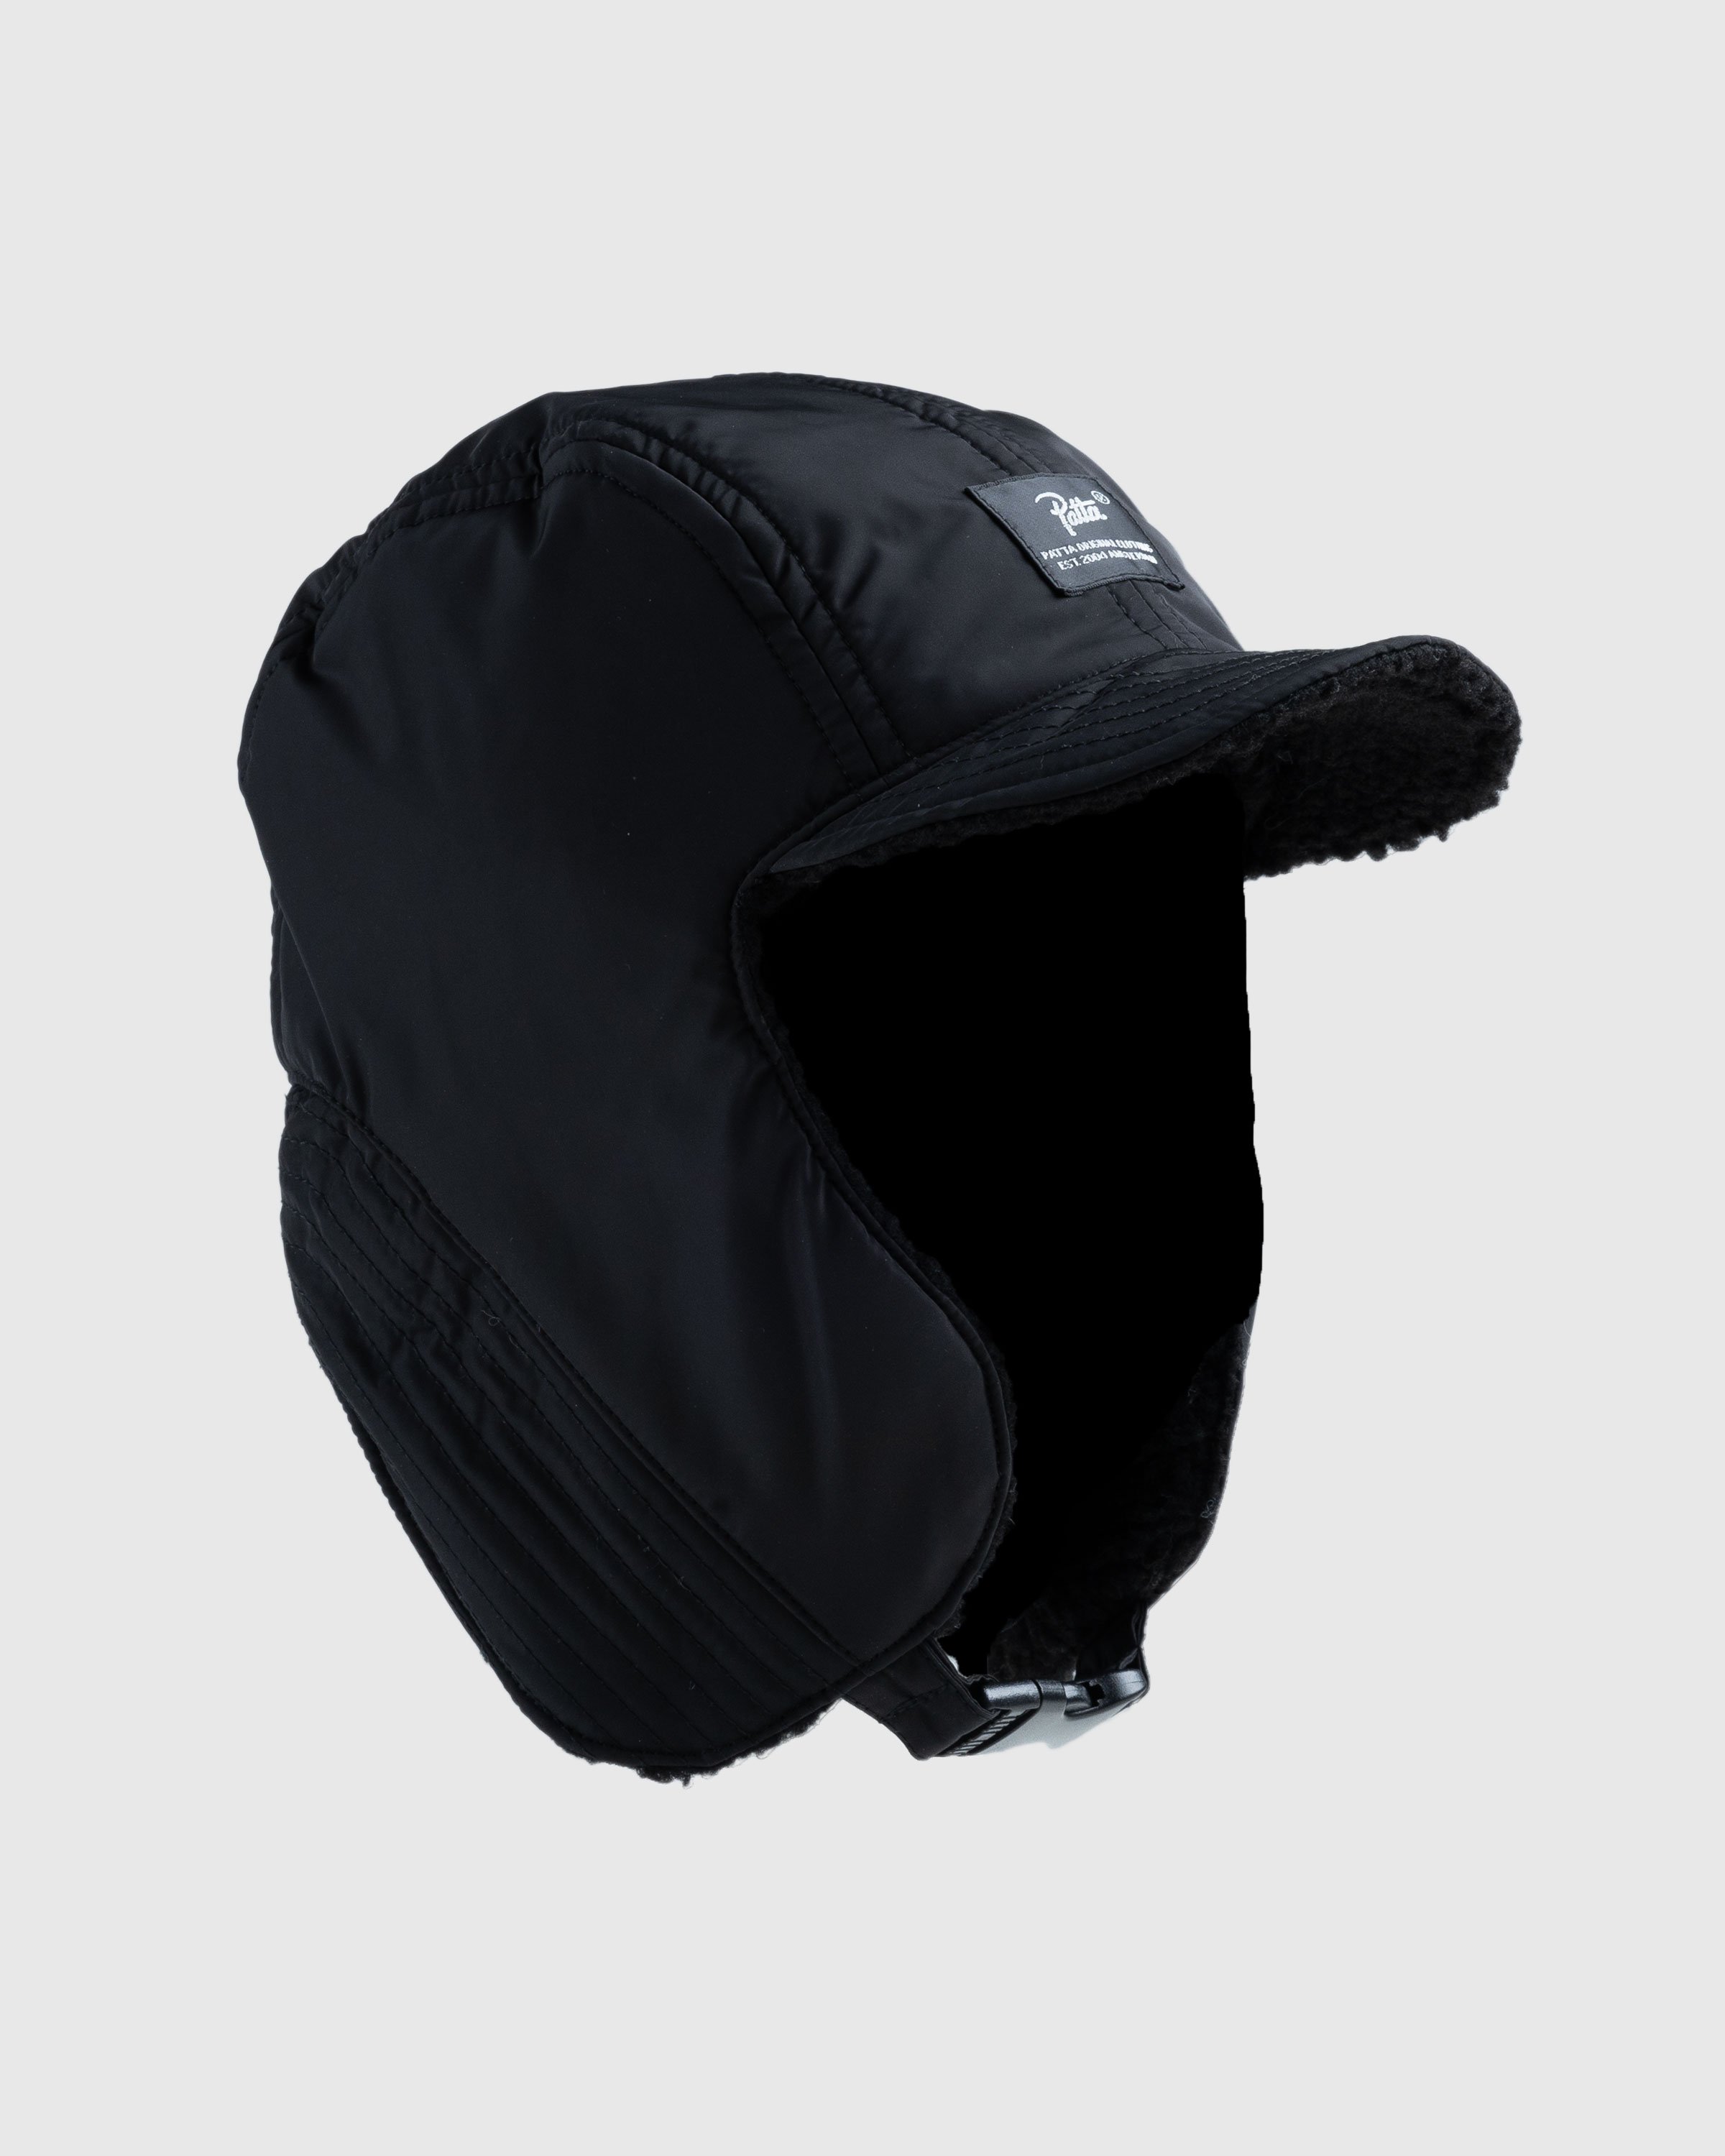 Patta - REVERSIBLE FLAP CAP Black - Accessories - Black - Image 3